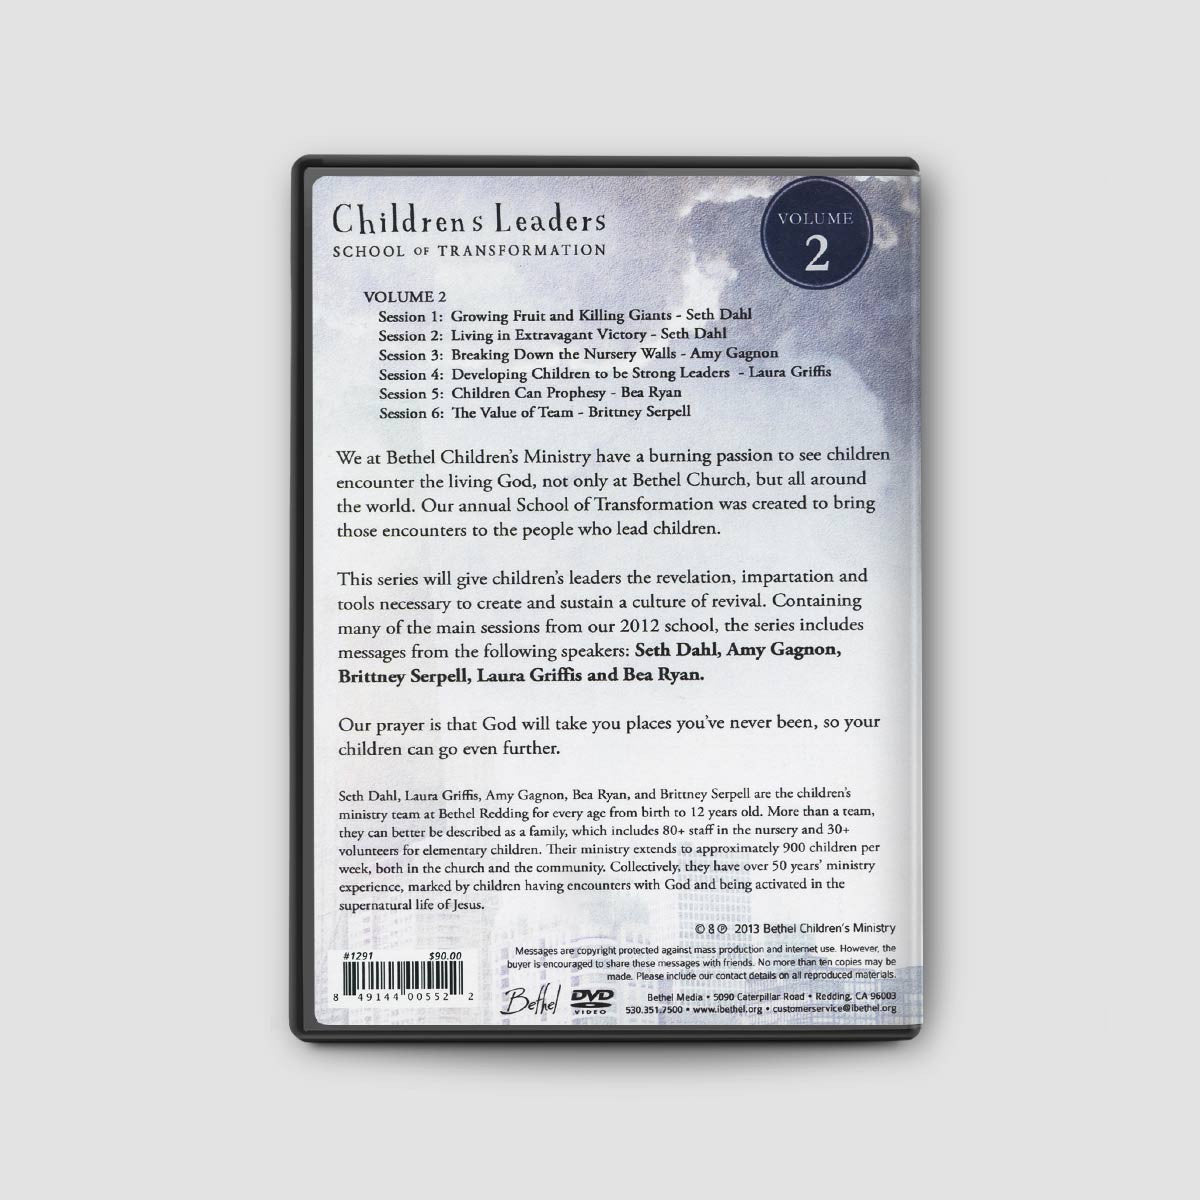 Children's Leaders School of Transformation (CLST) - Volume 2